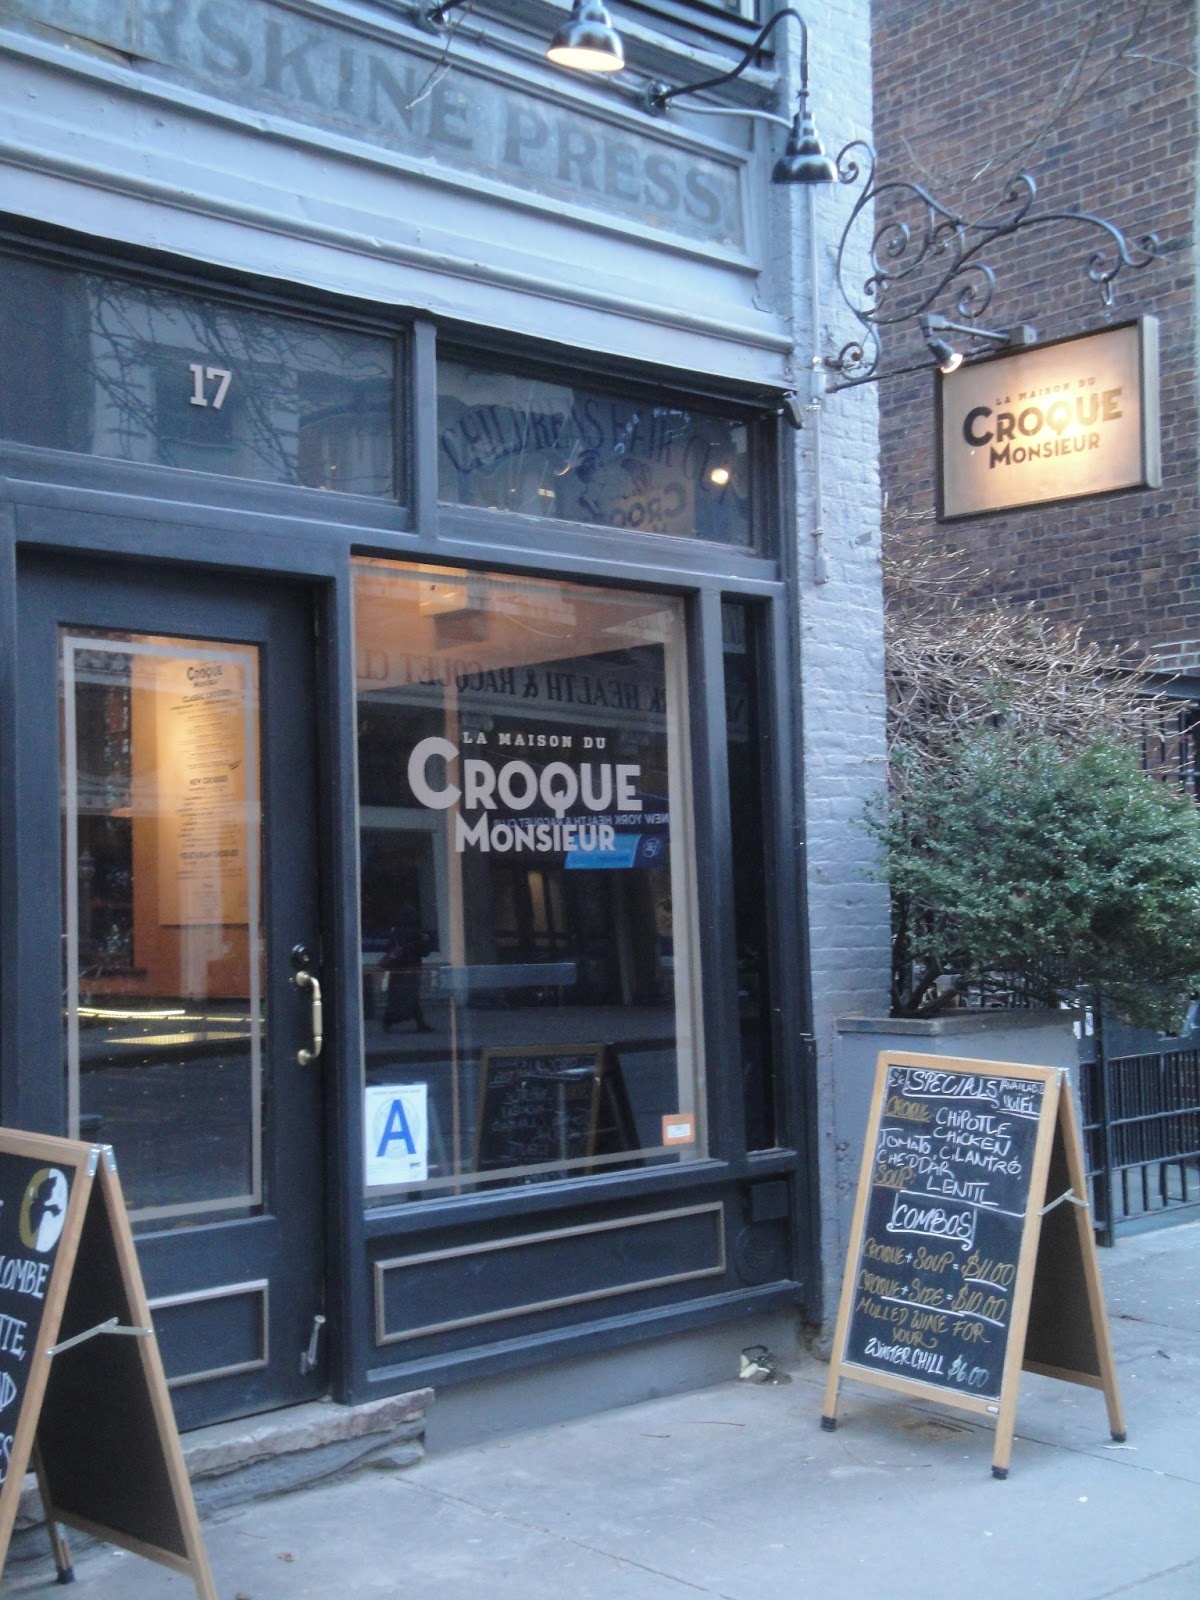 Photo of La Maison du Croque Monsieur in New York City, New York, United States - 3 Picture of Restaurant, Food, Point of interest, Establishment